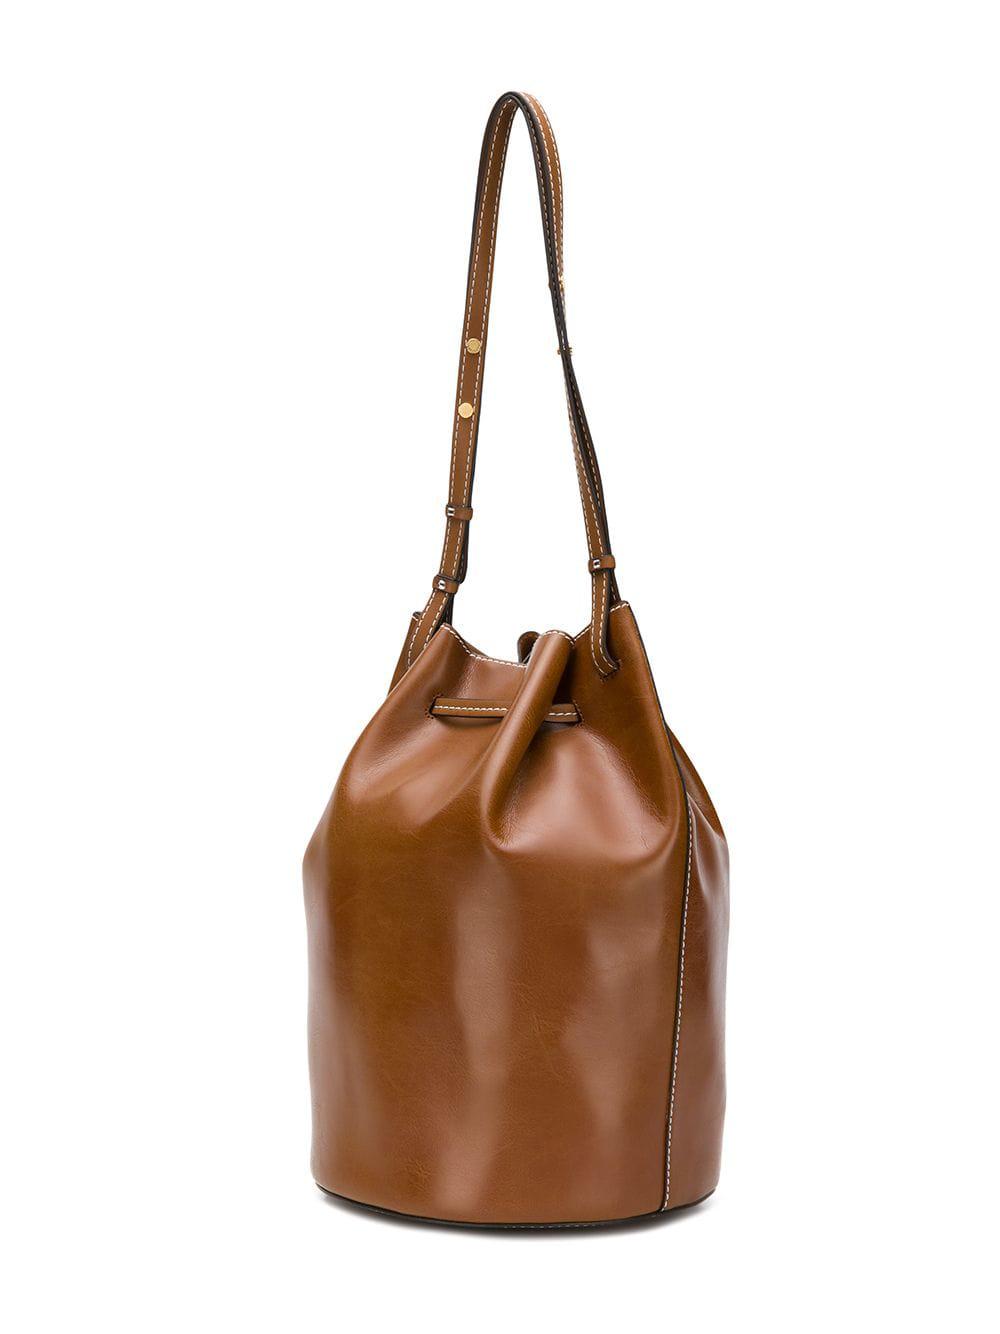 Stella McCartney Leather Drawstring Shoulder Bag in Brown - Lyst